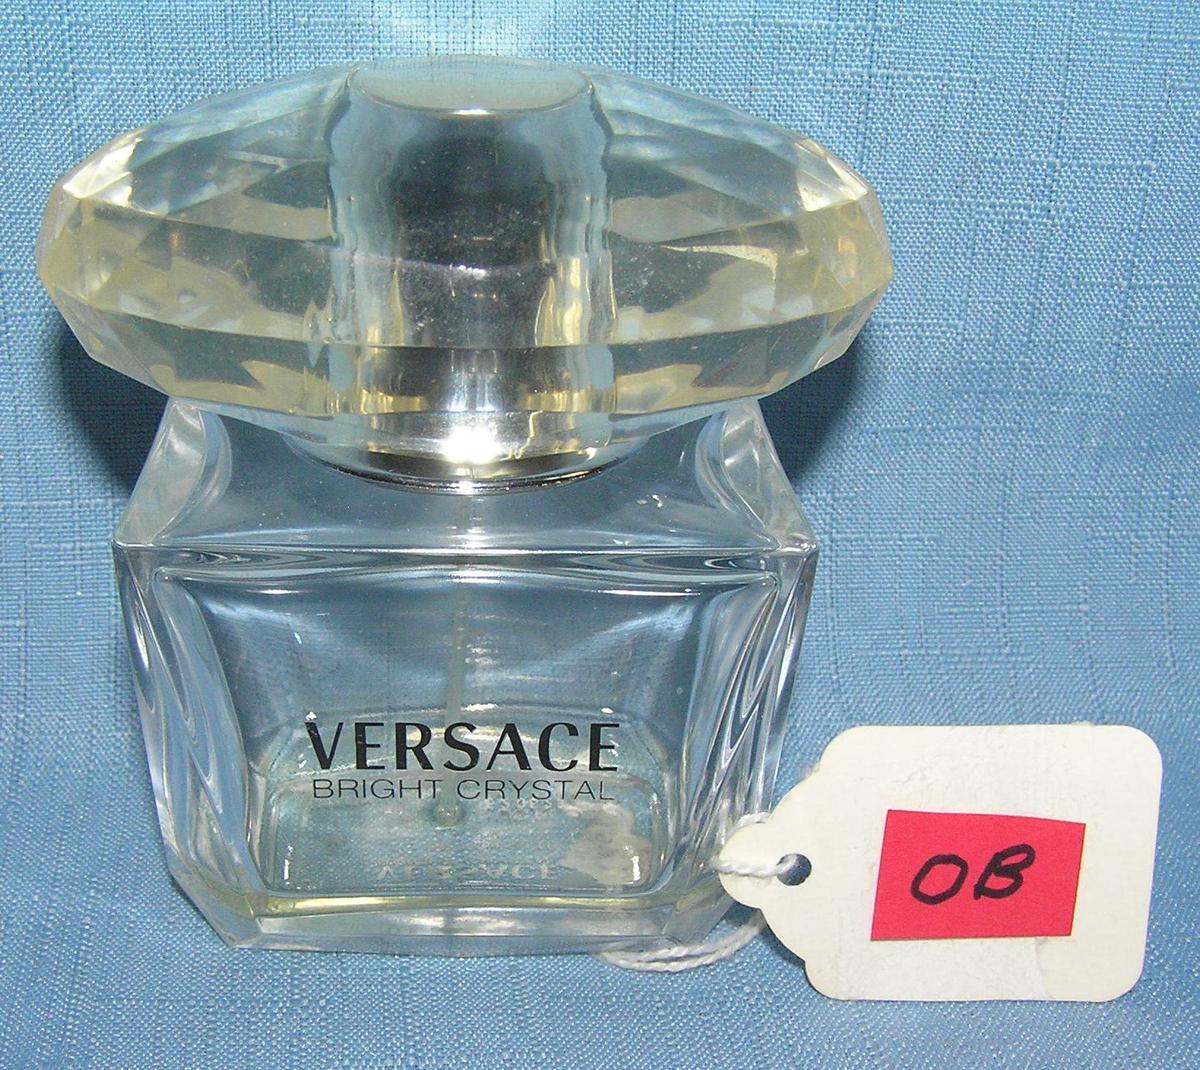 Versace bright crystal designer perfume bottle